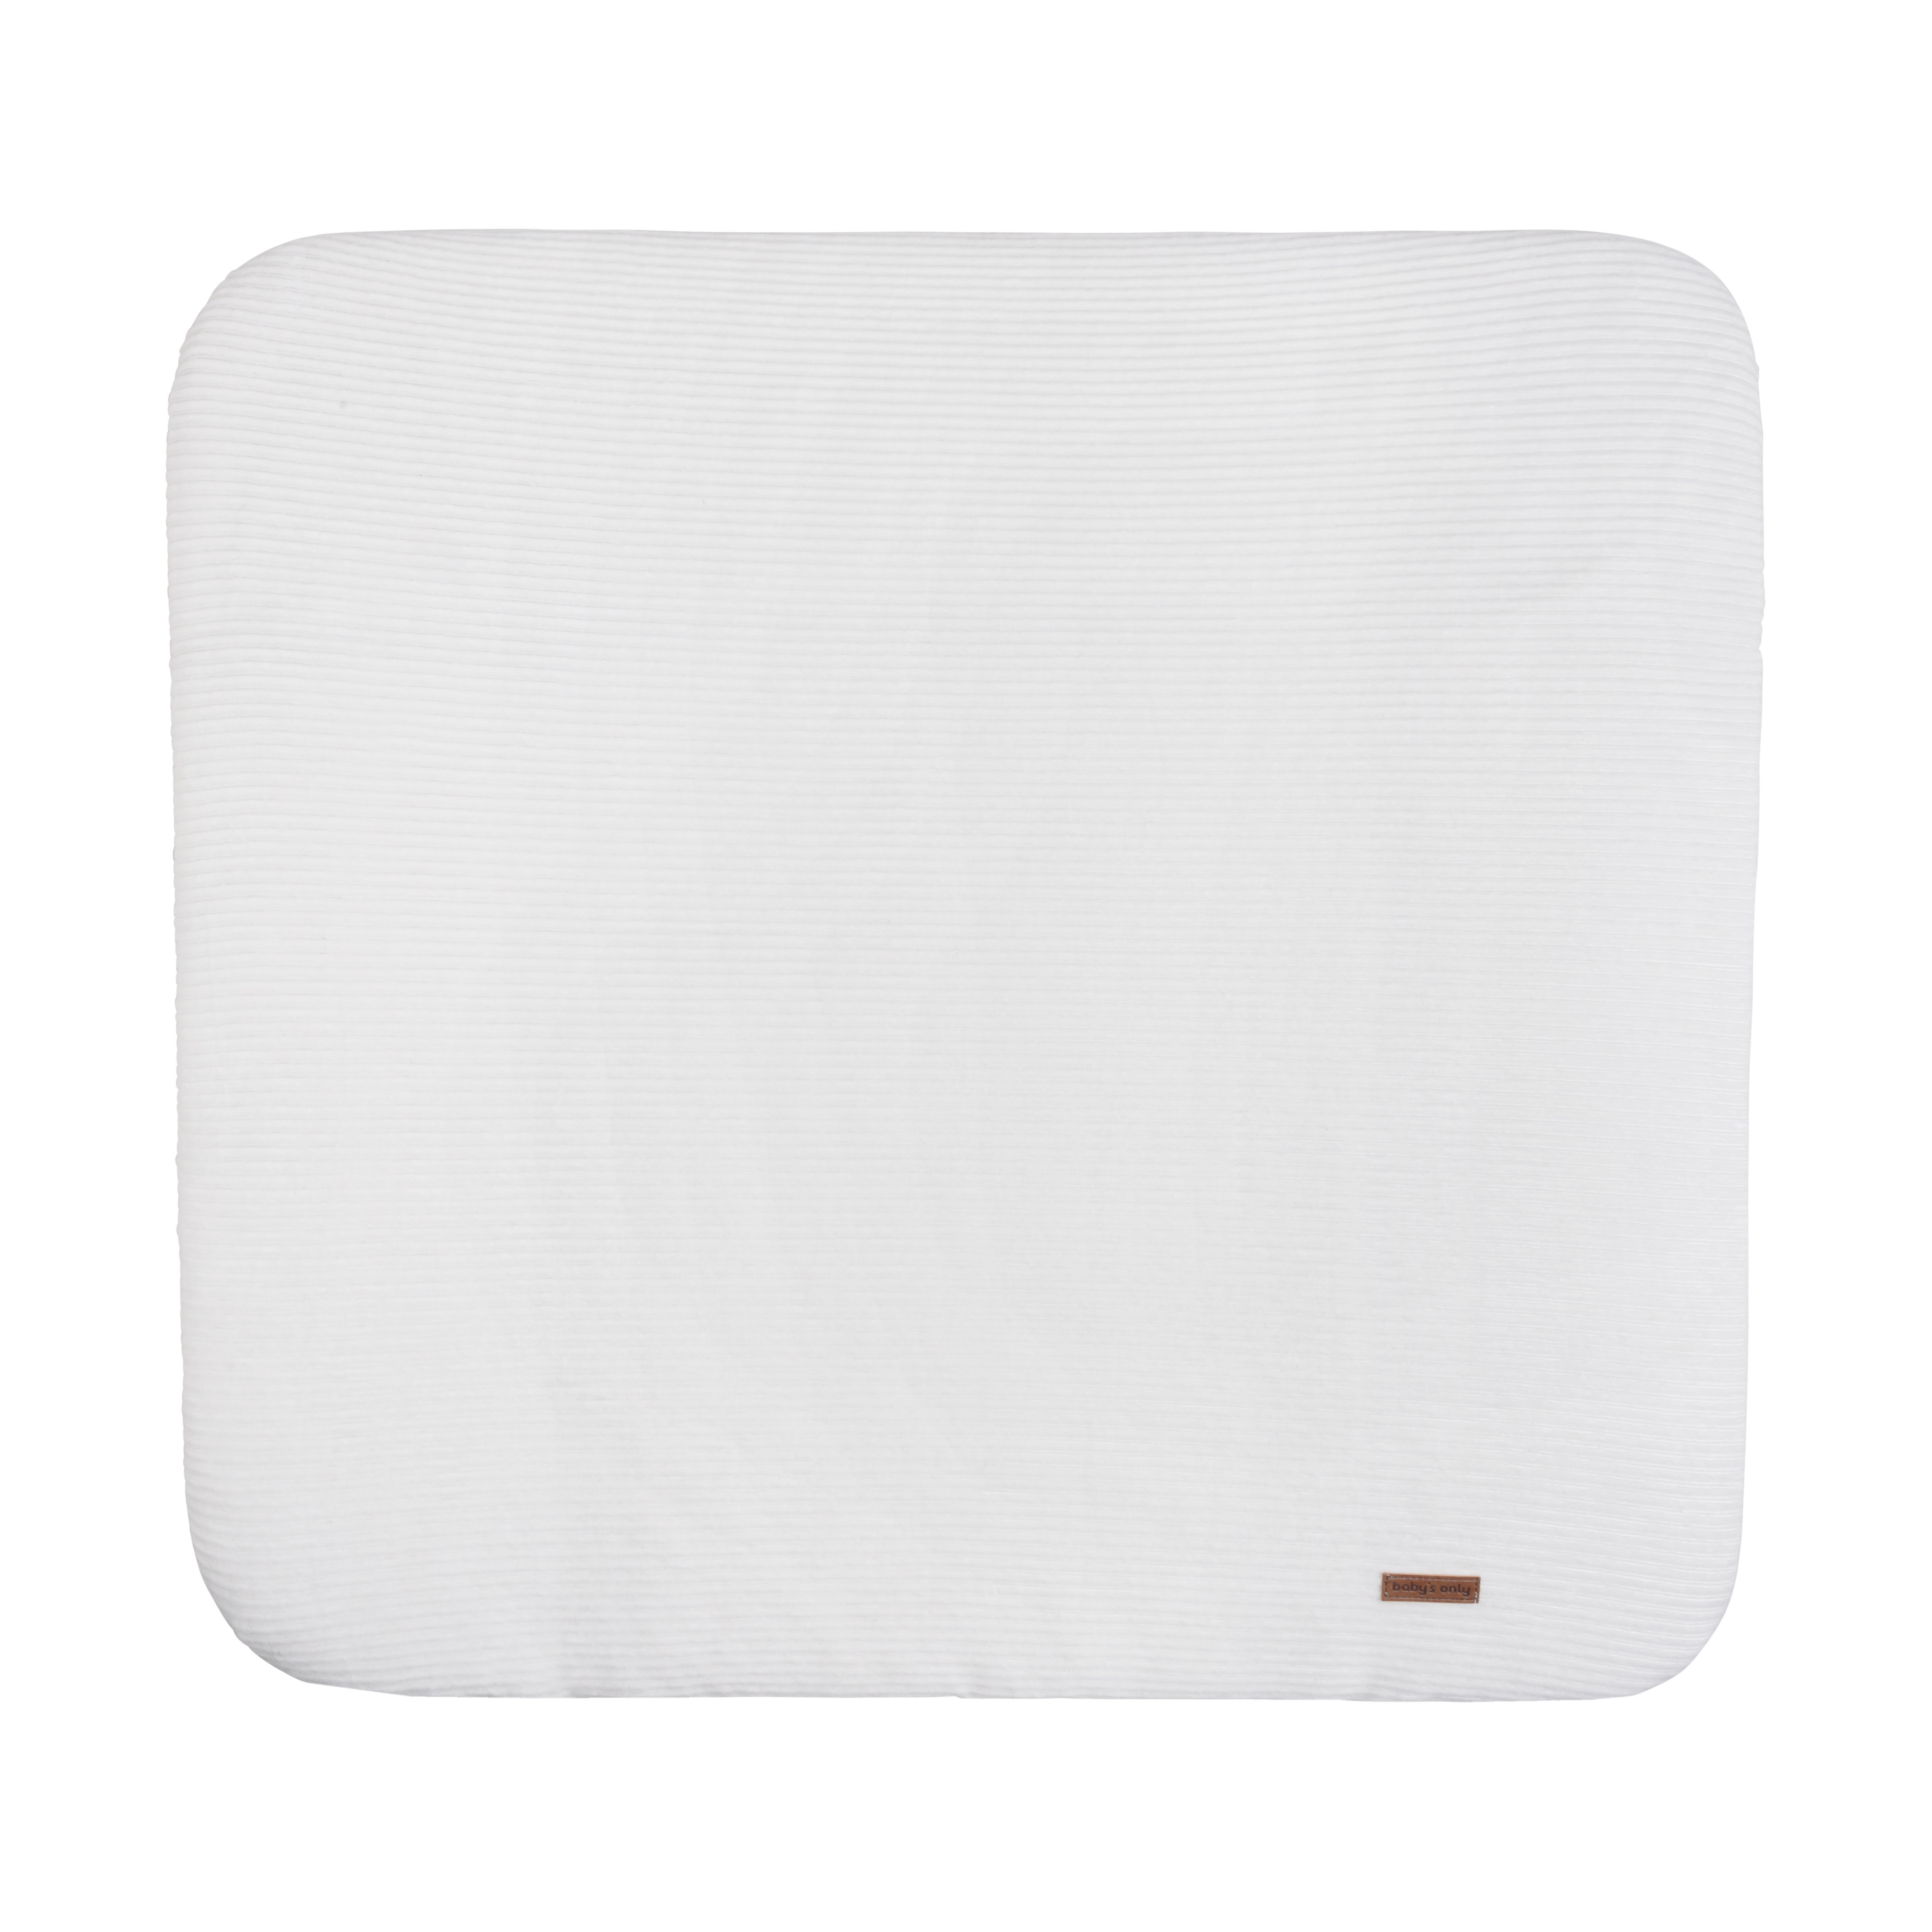 Changing pad cover Sense white - 75x85